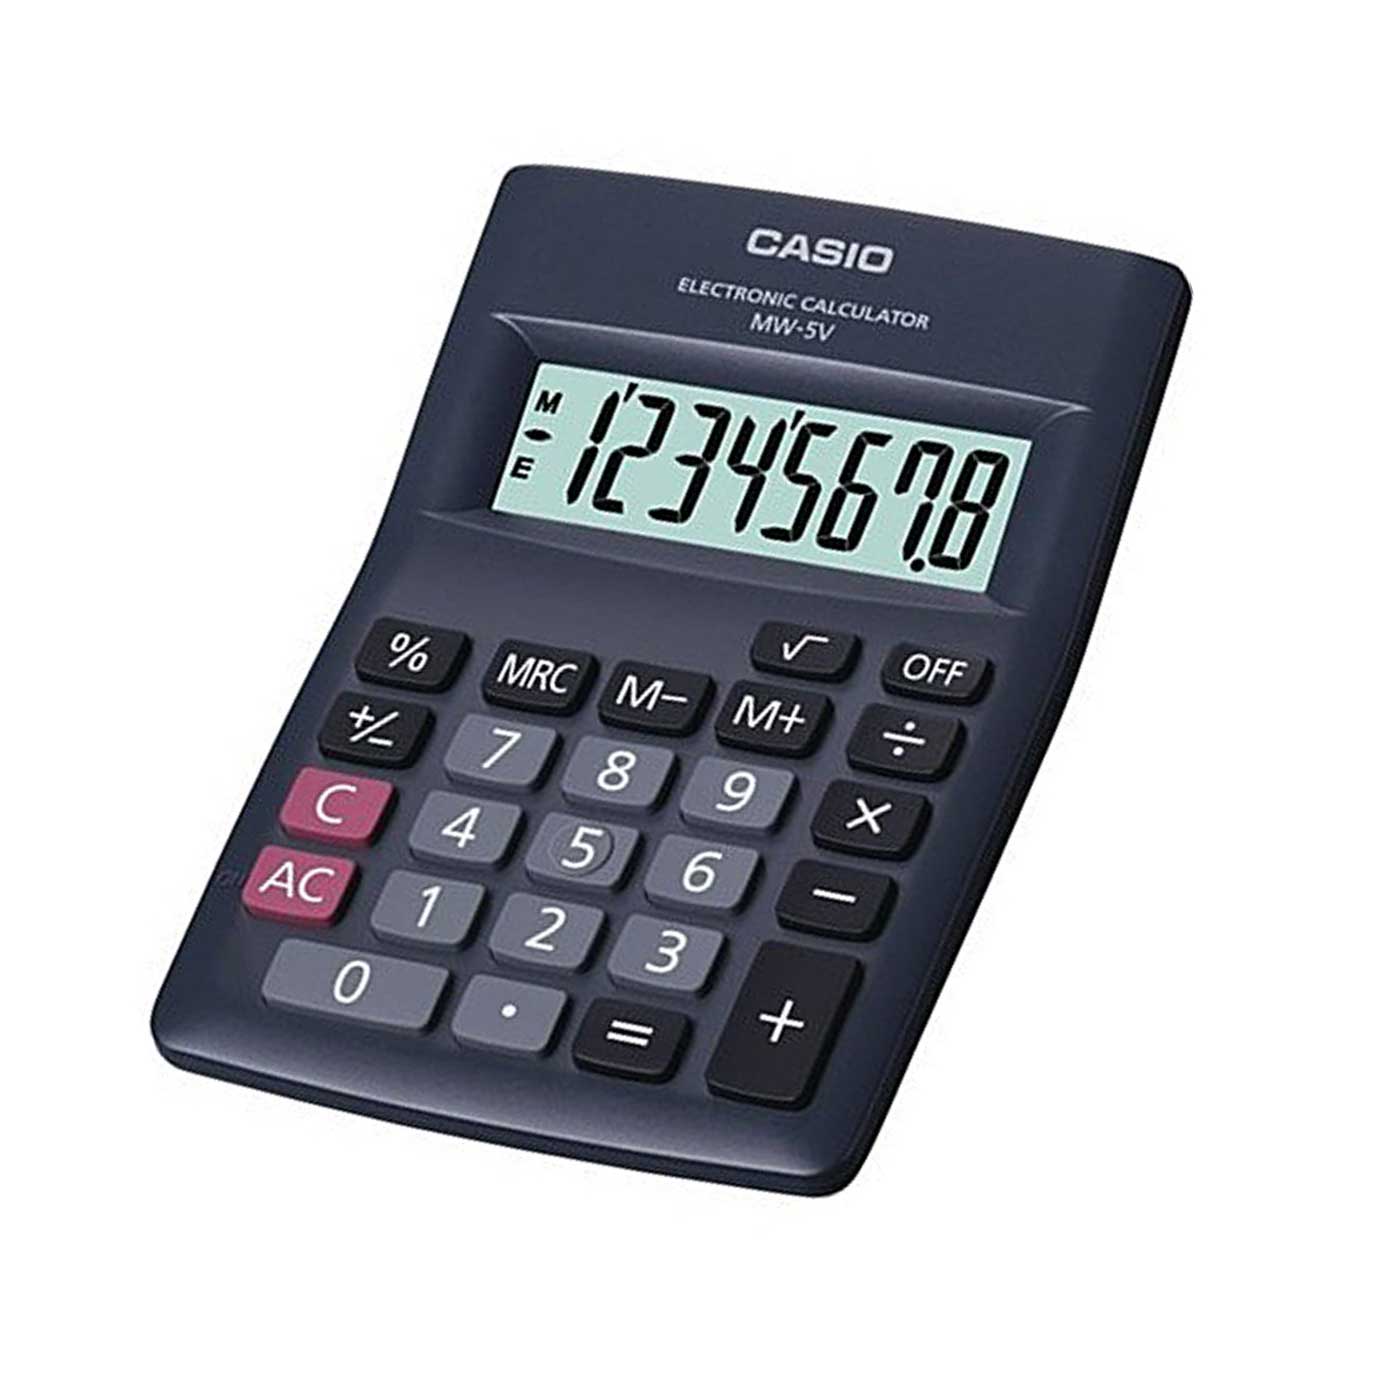 Casio MW-5V Pocket Calculator